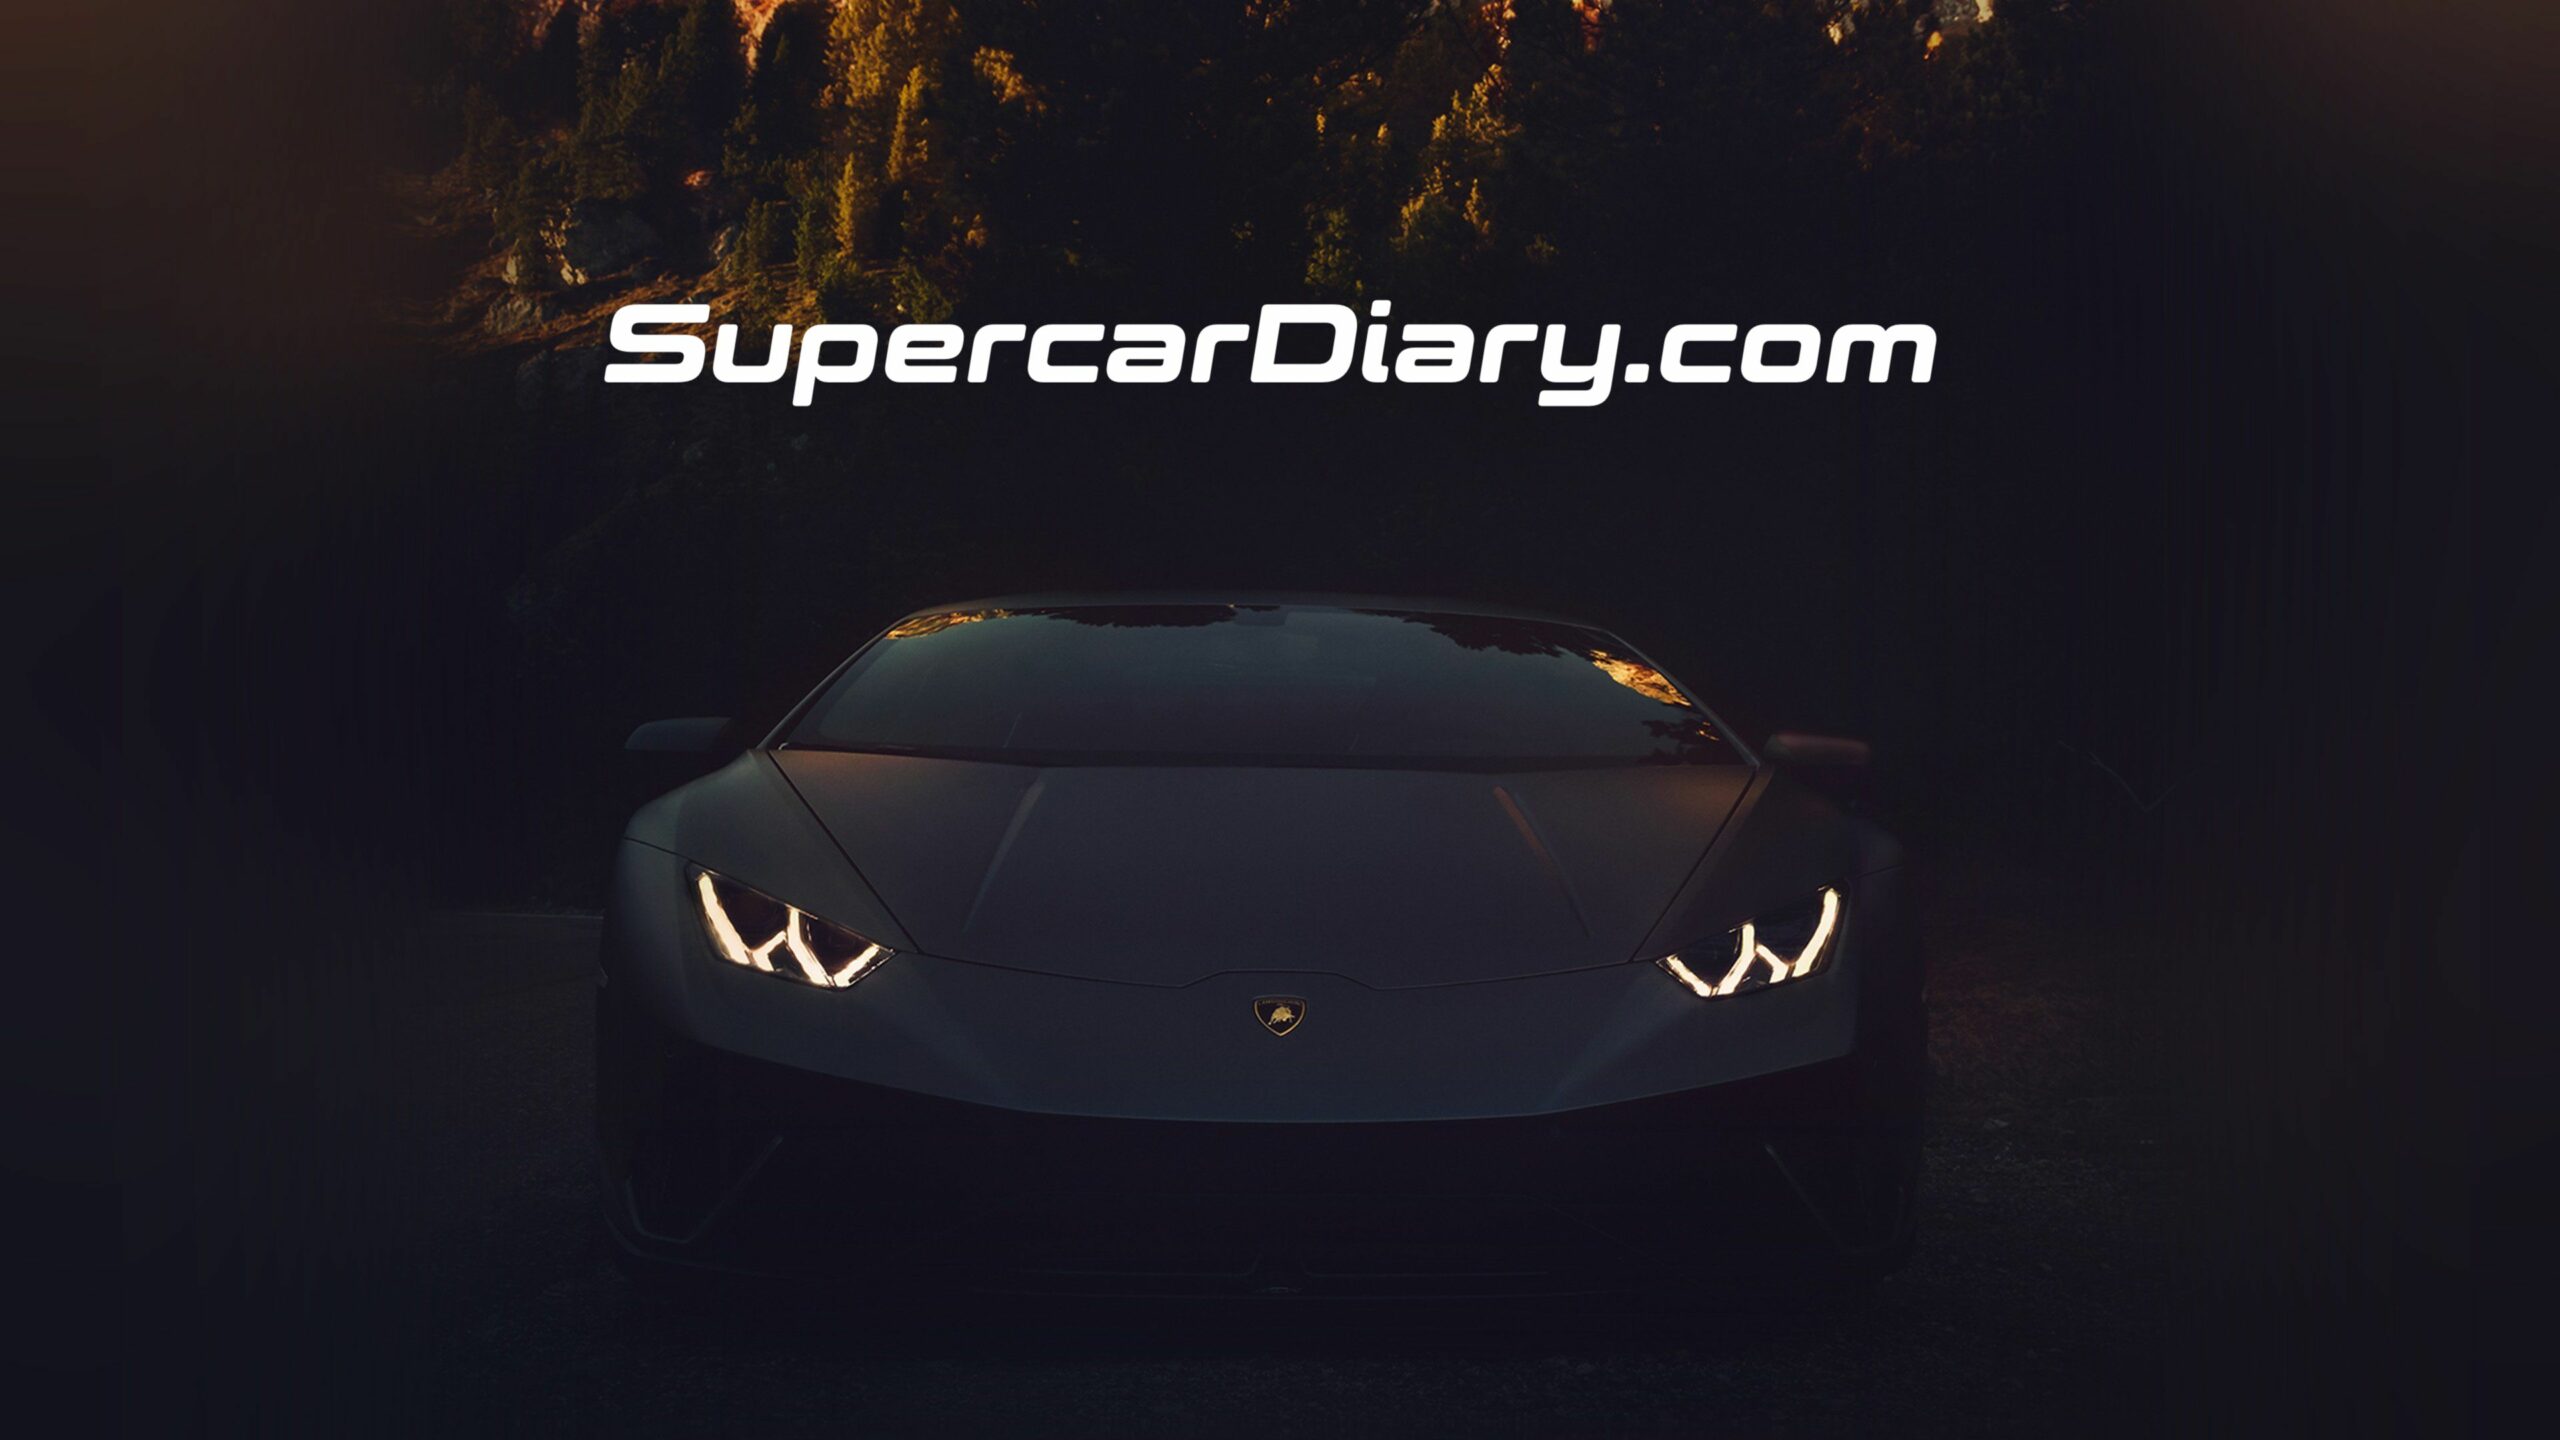 Supercar Diary